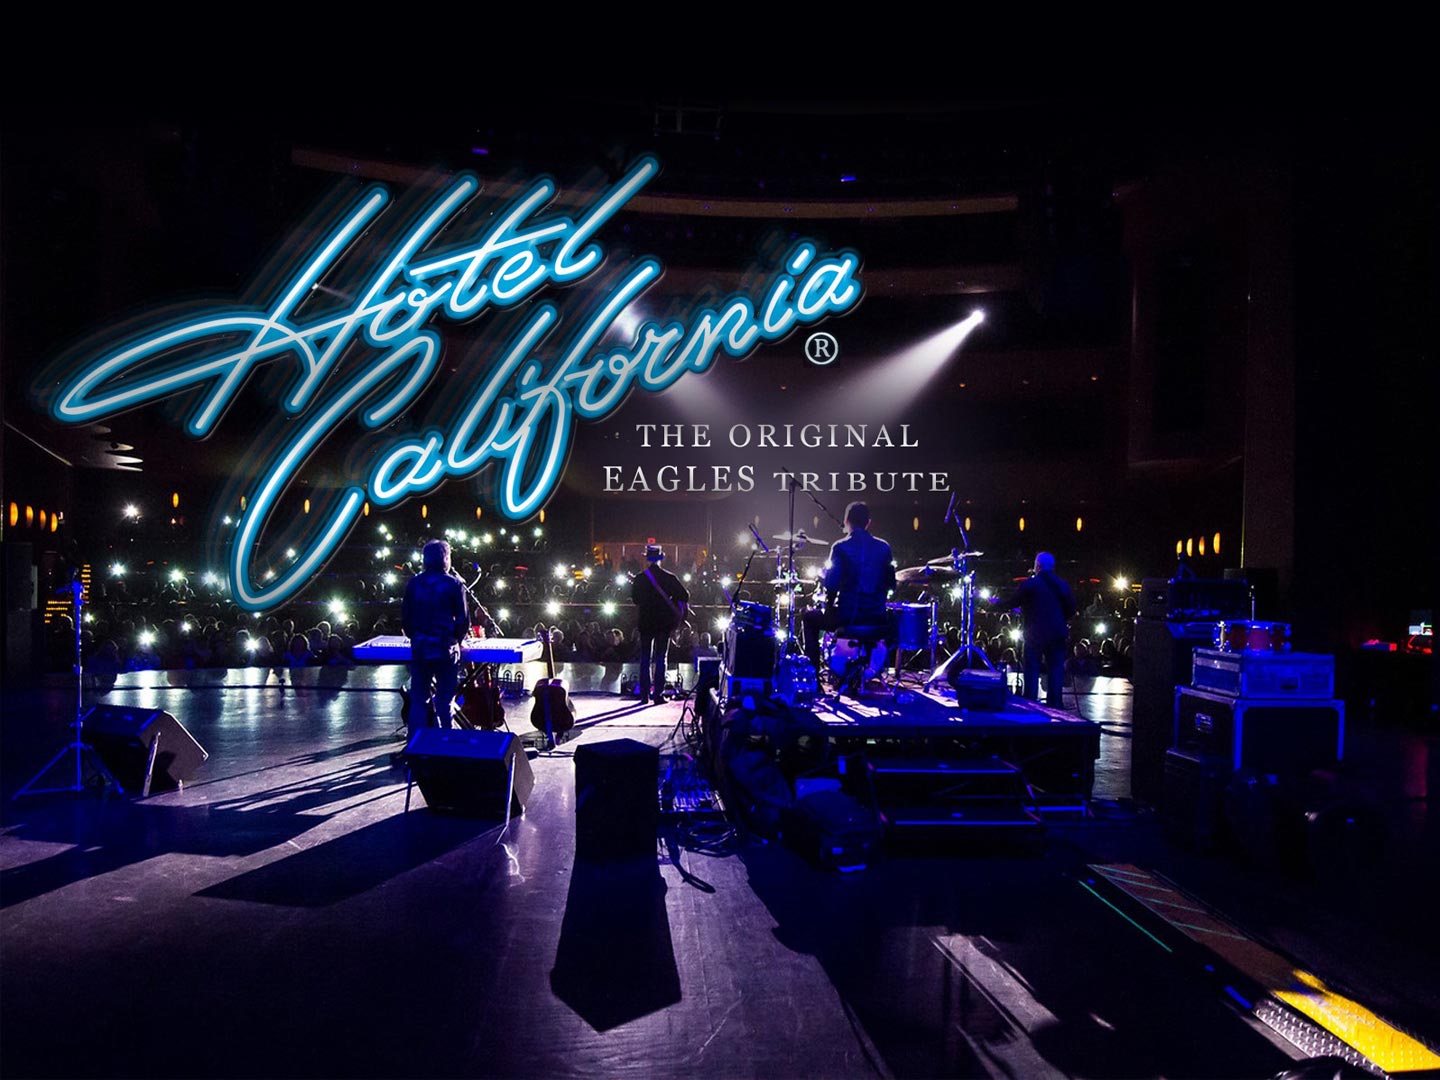 HOTEL CALIFORNIA - The World’s Original Tribute to The Eagles